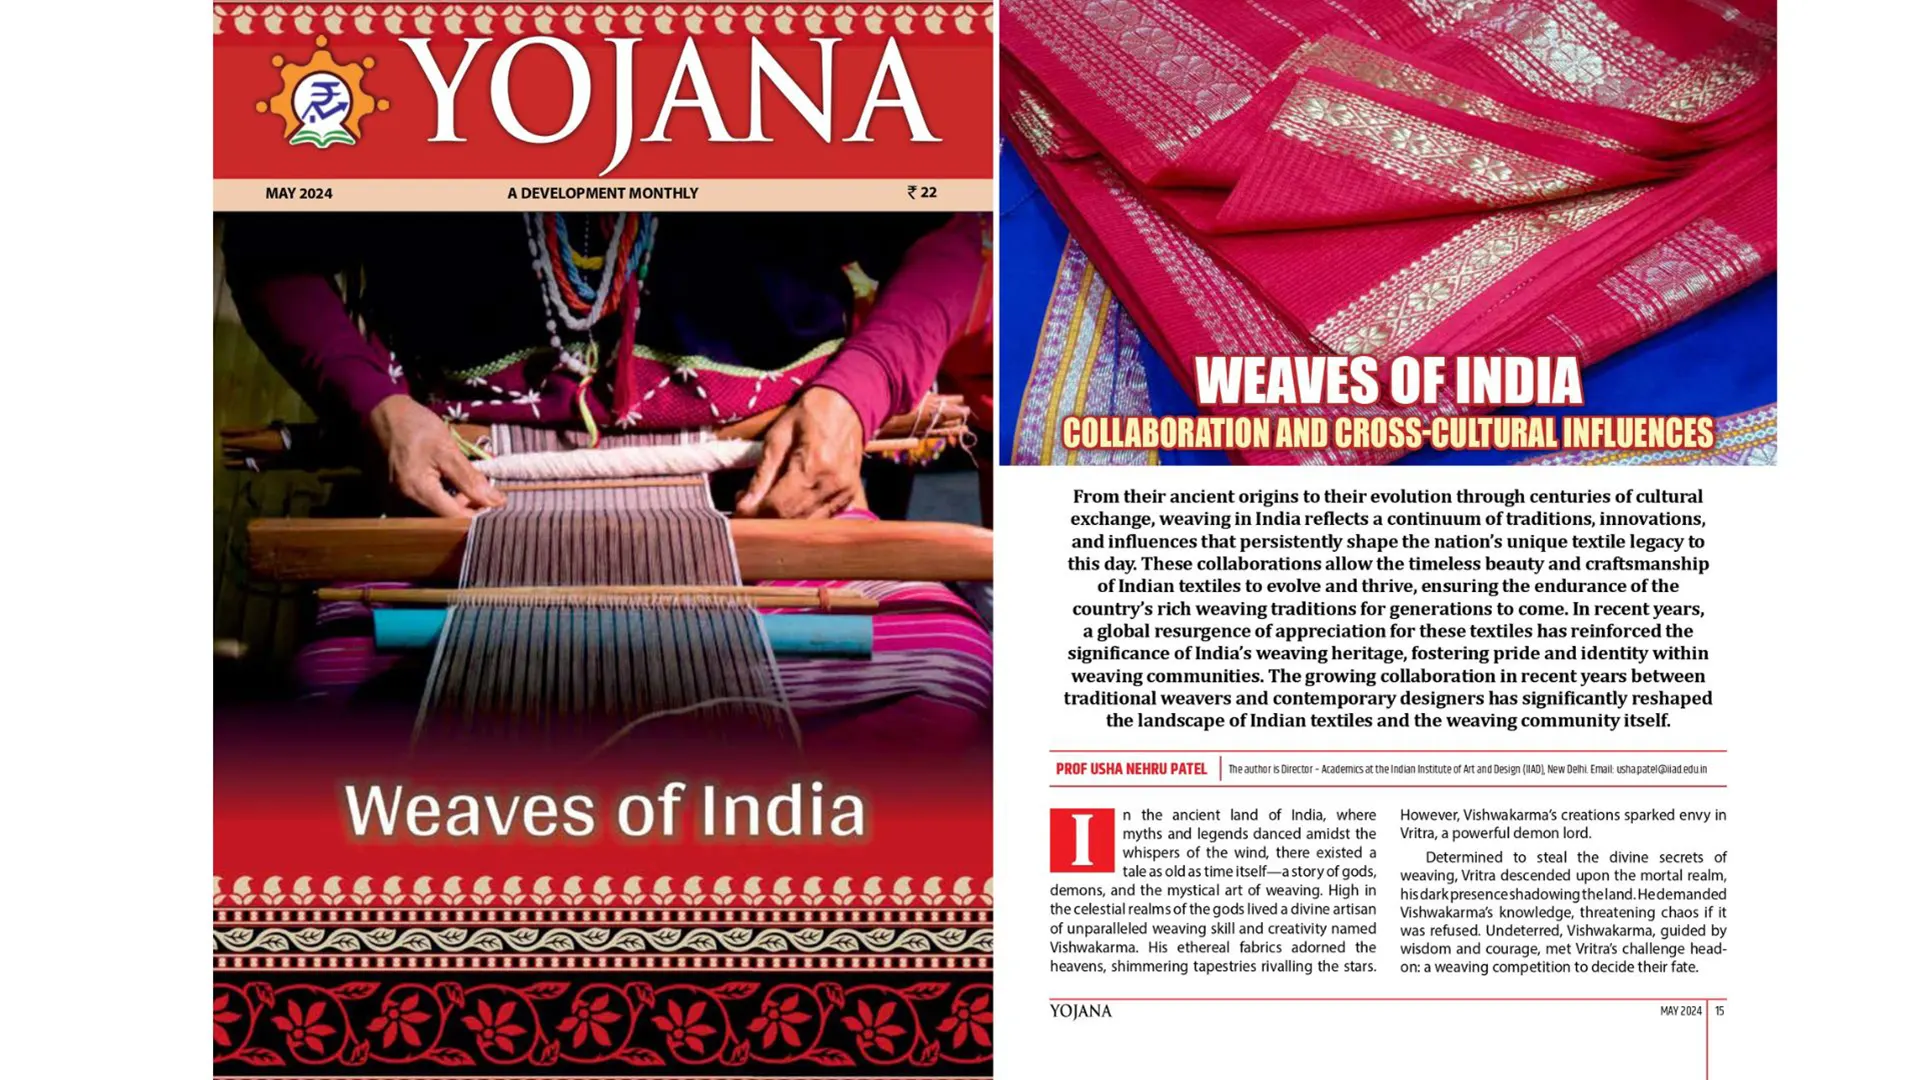 A glimpse into the yojana journal